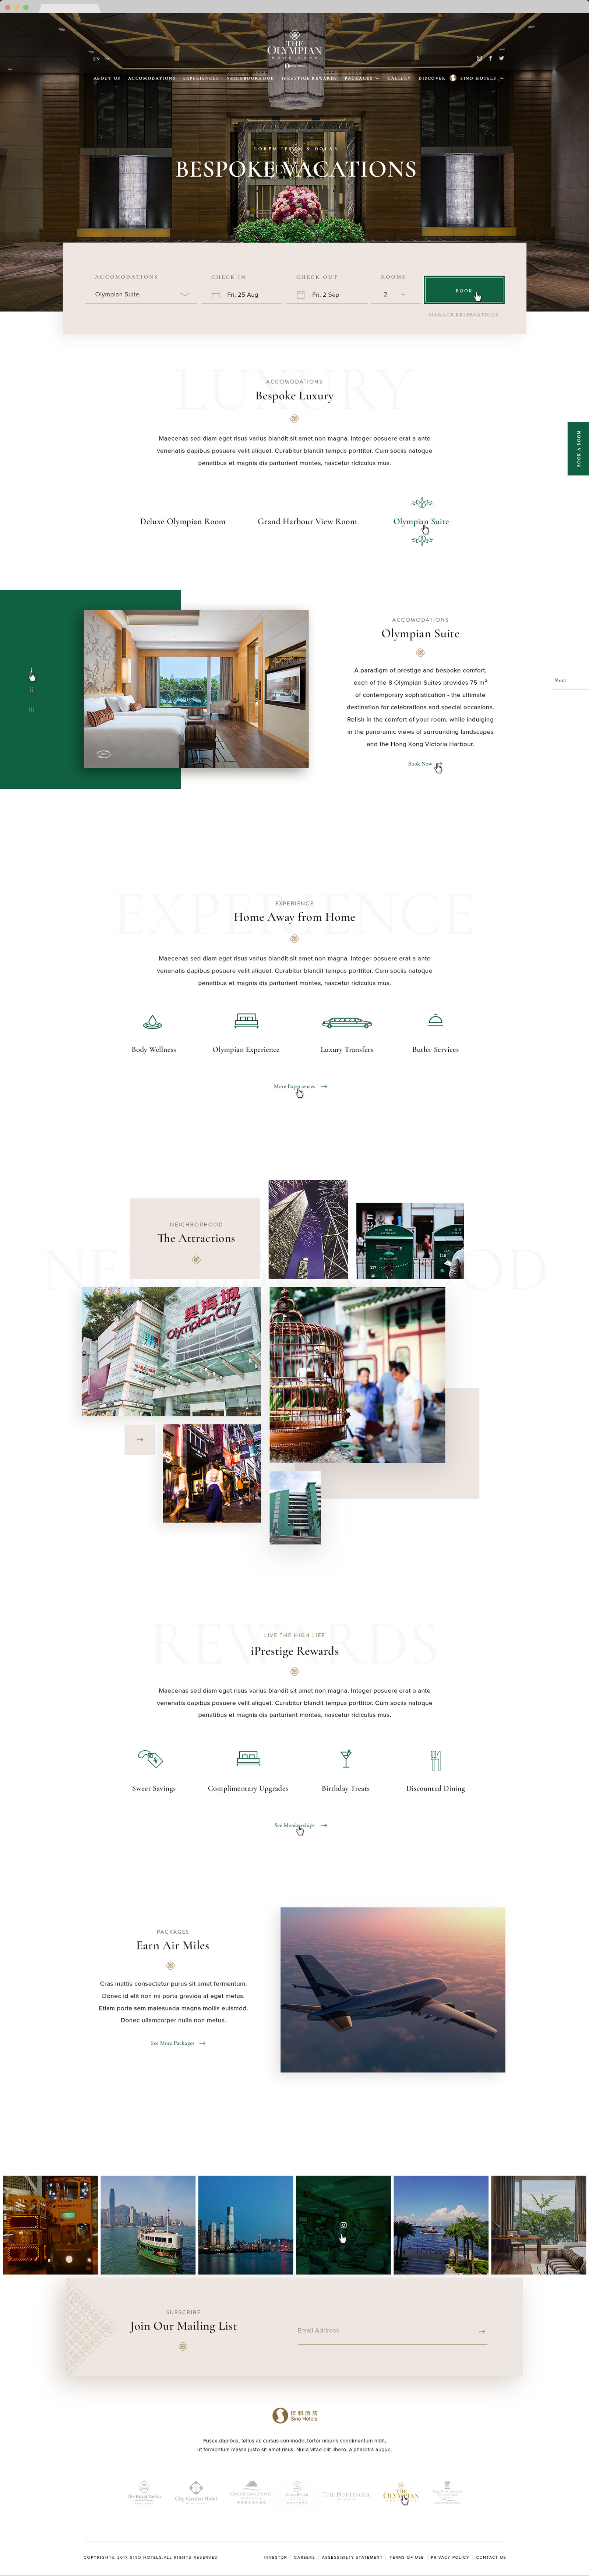 web design singapore sino group hotels 01 - Sino Group Hotels